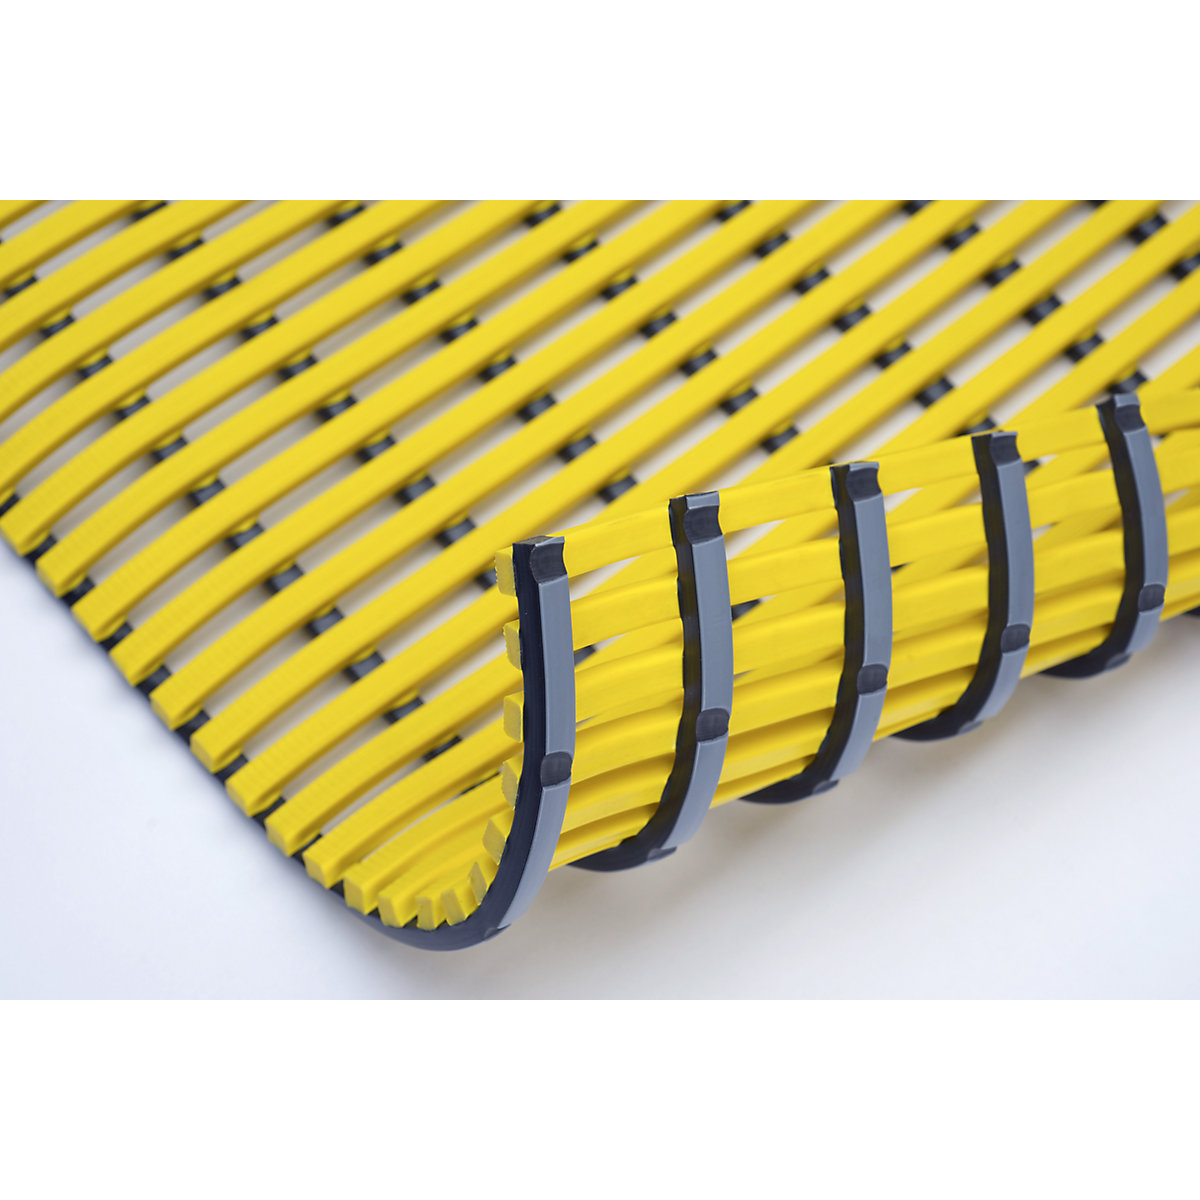 Wet room mat, anti-bacterial, 10 m roll, yellow, width 600 mm